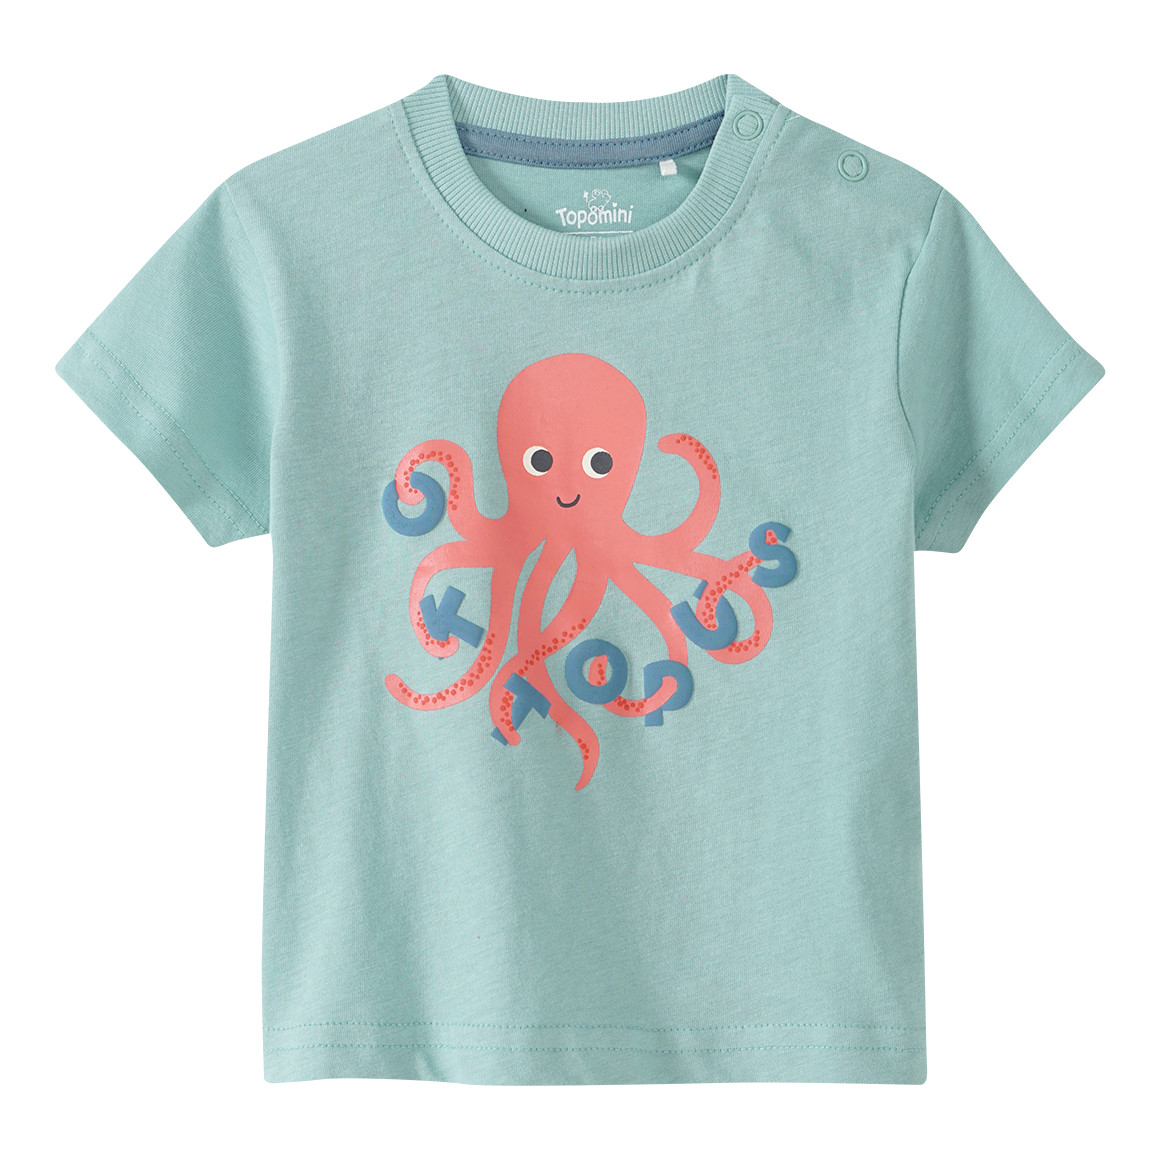 Baby T-Shirt mit Oktopus-Motiv von Topomini